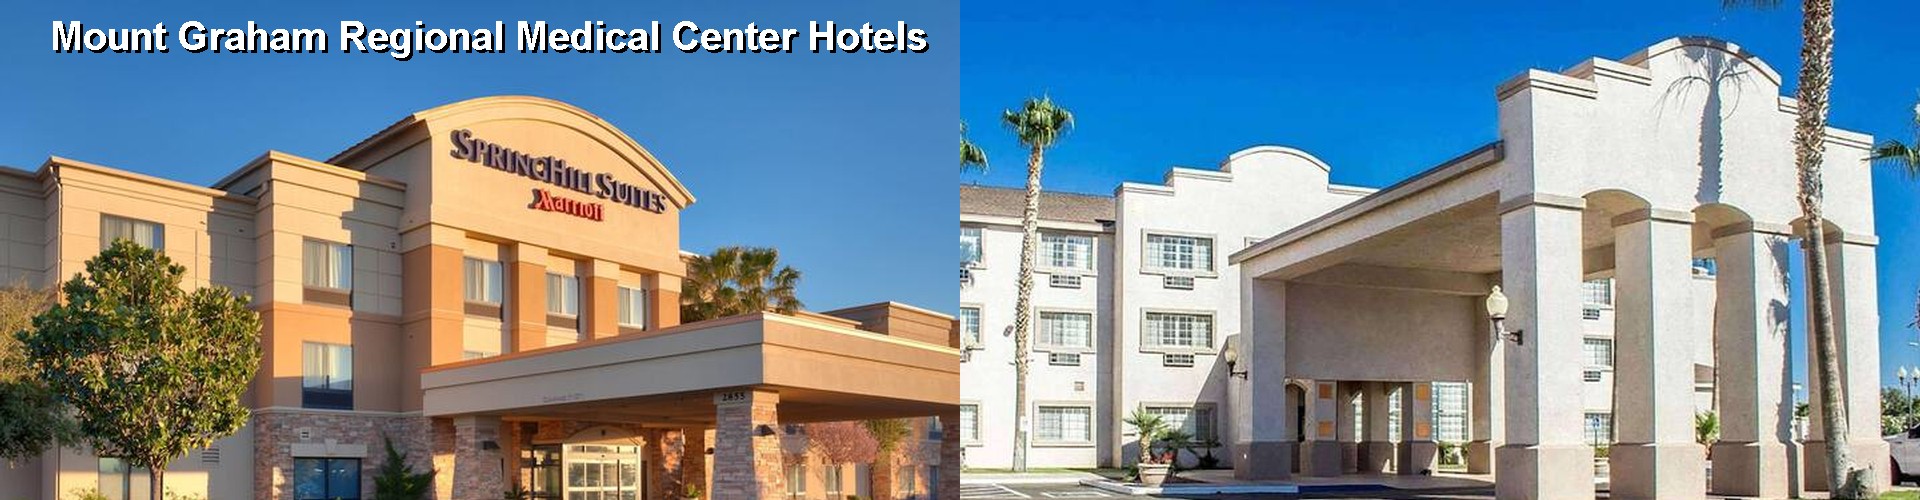 4 Best Hotels near Mount Graham Regional Medical Center